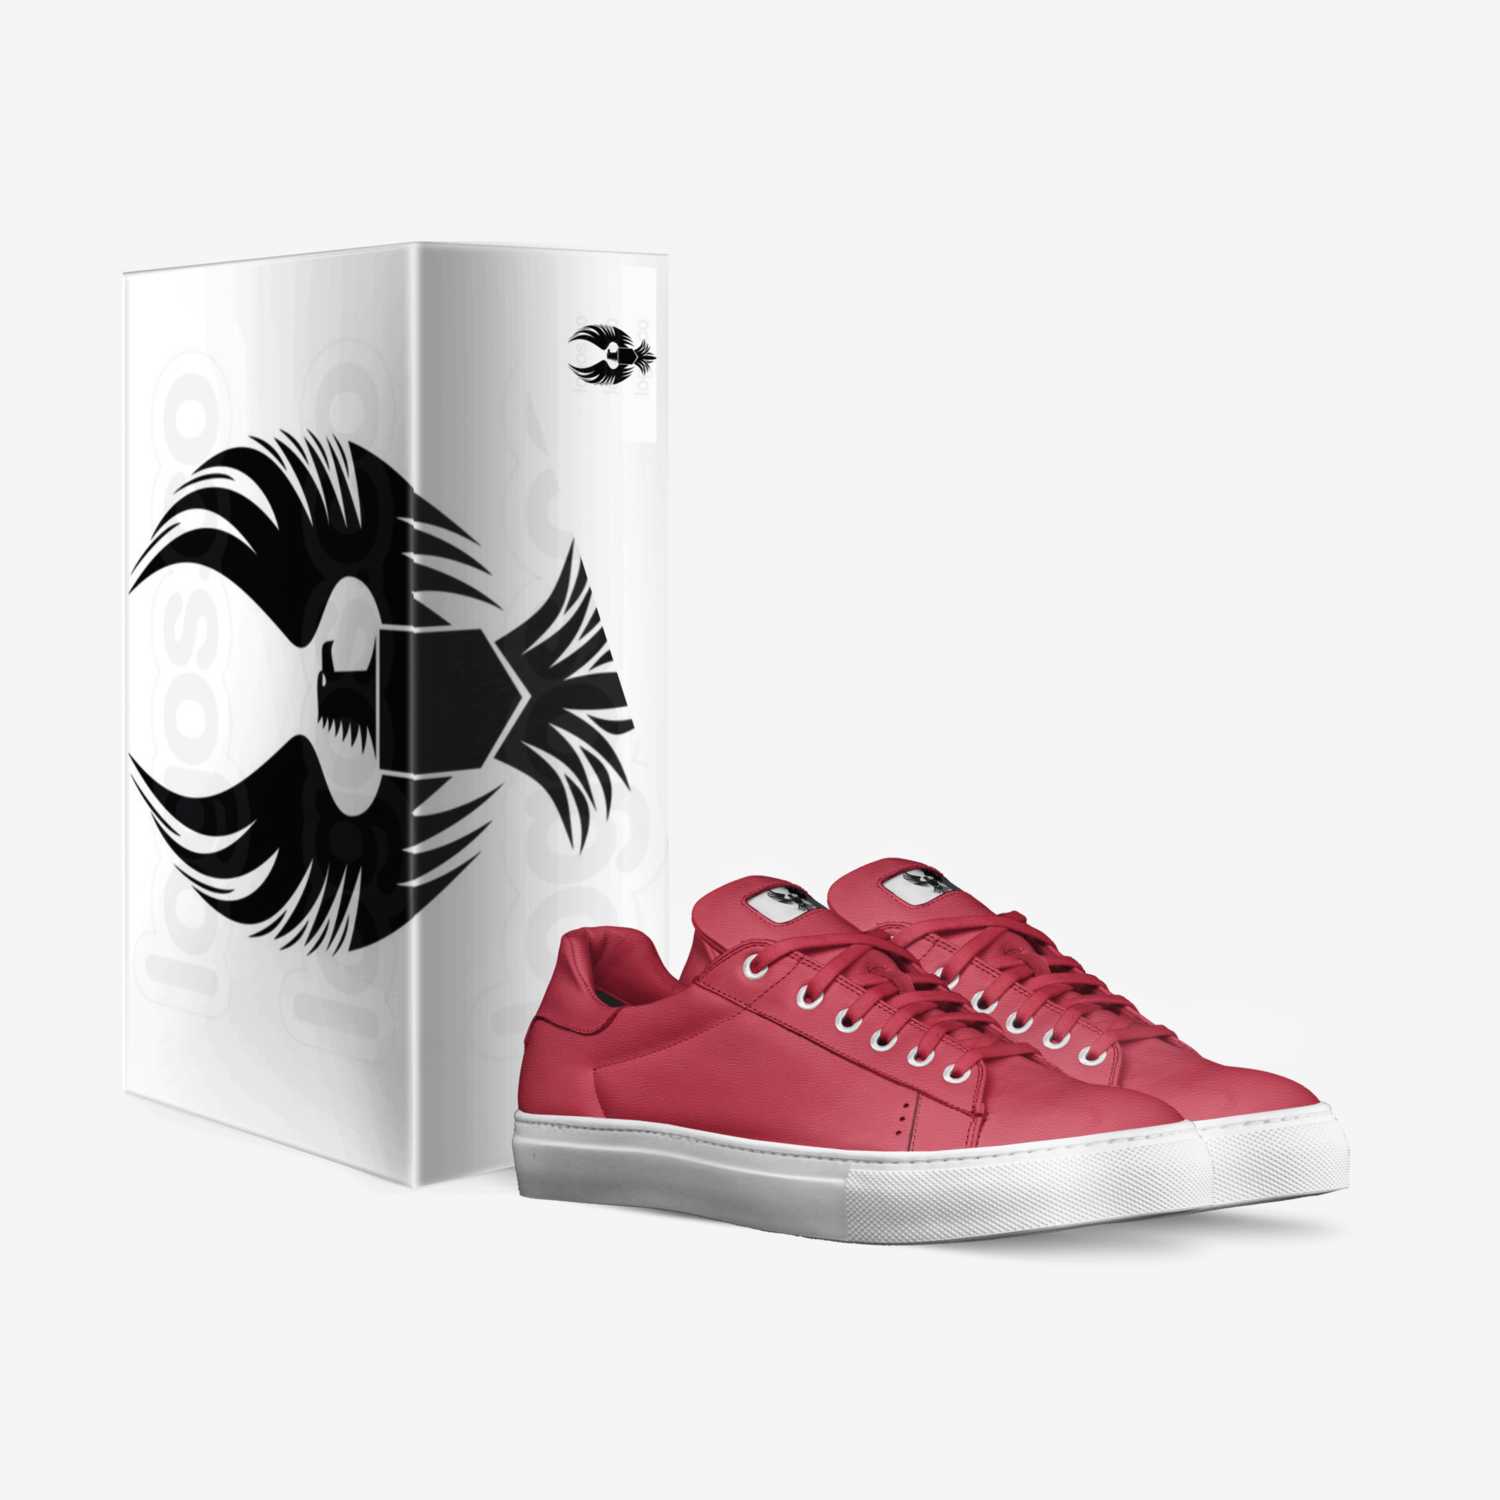 KAZA1s custom made in Italy shoes by Kaza Gray | Box view